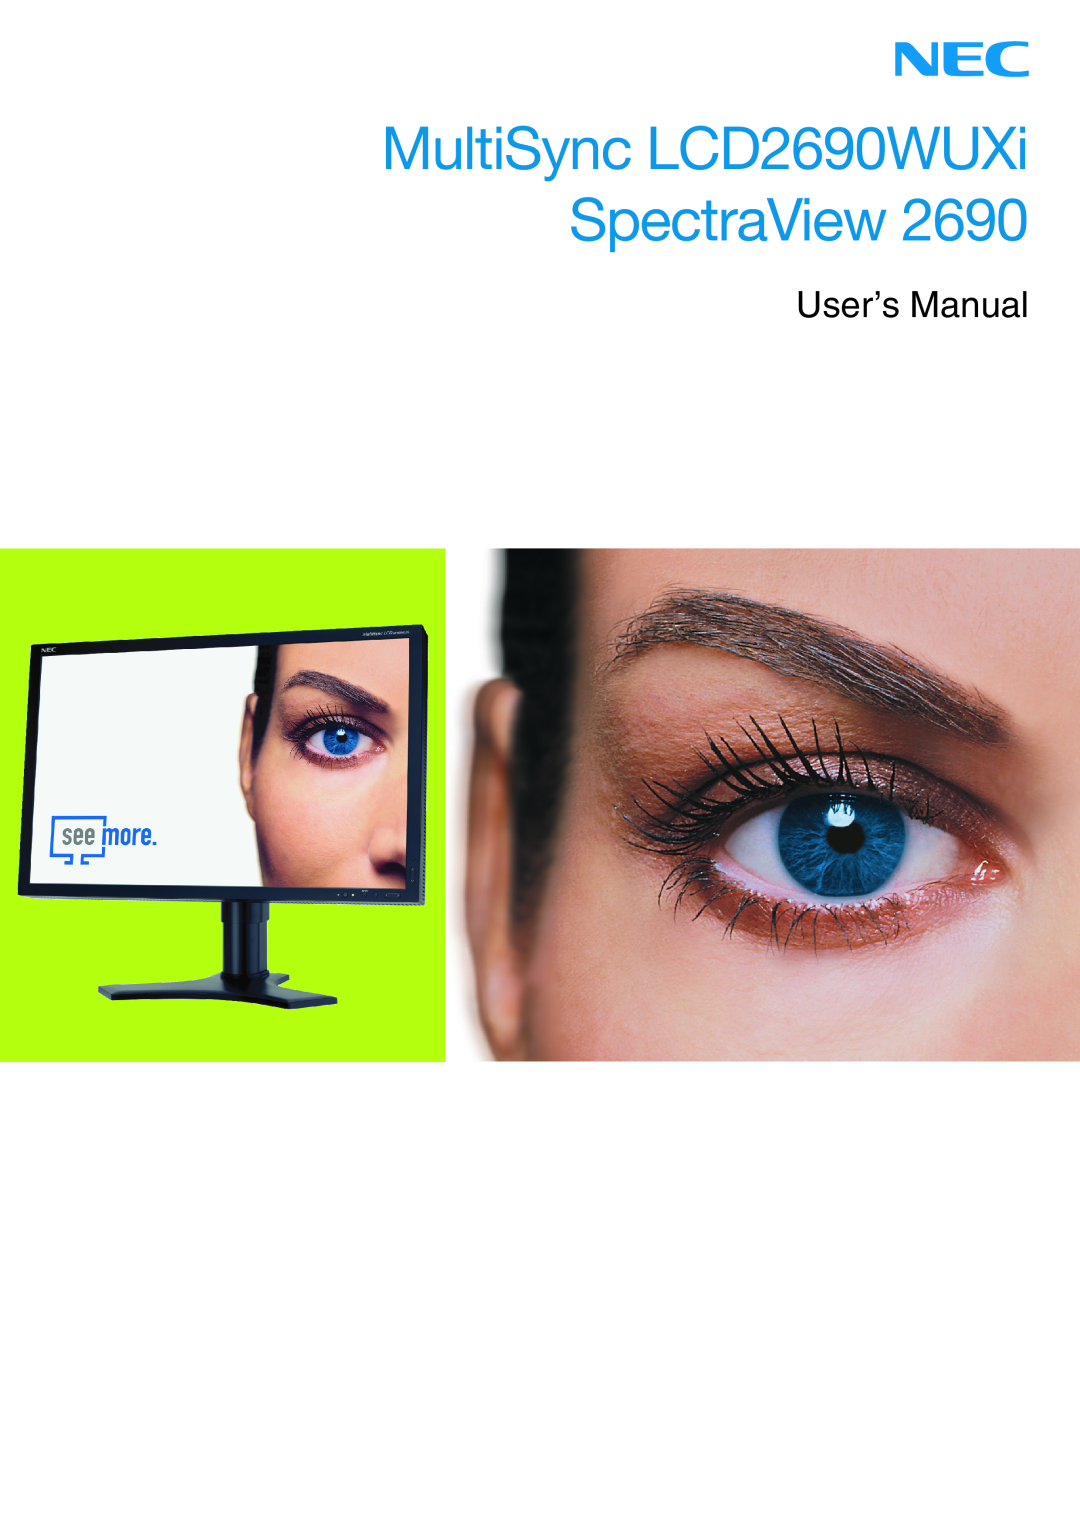 NEC user manual MultiSync LCD2690WUXi SpectraView, UserÕs Manual 